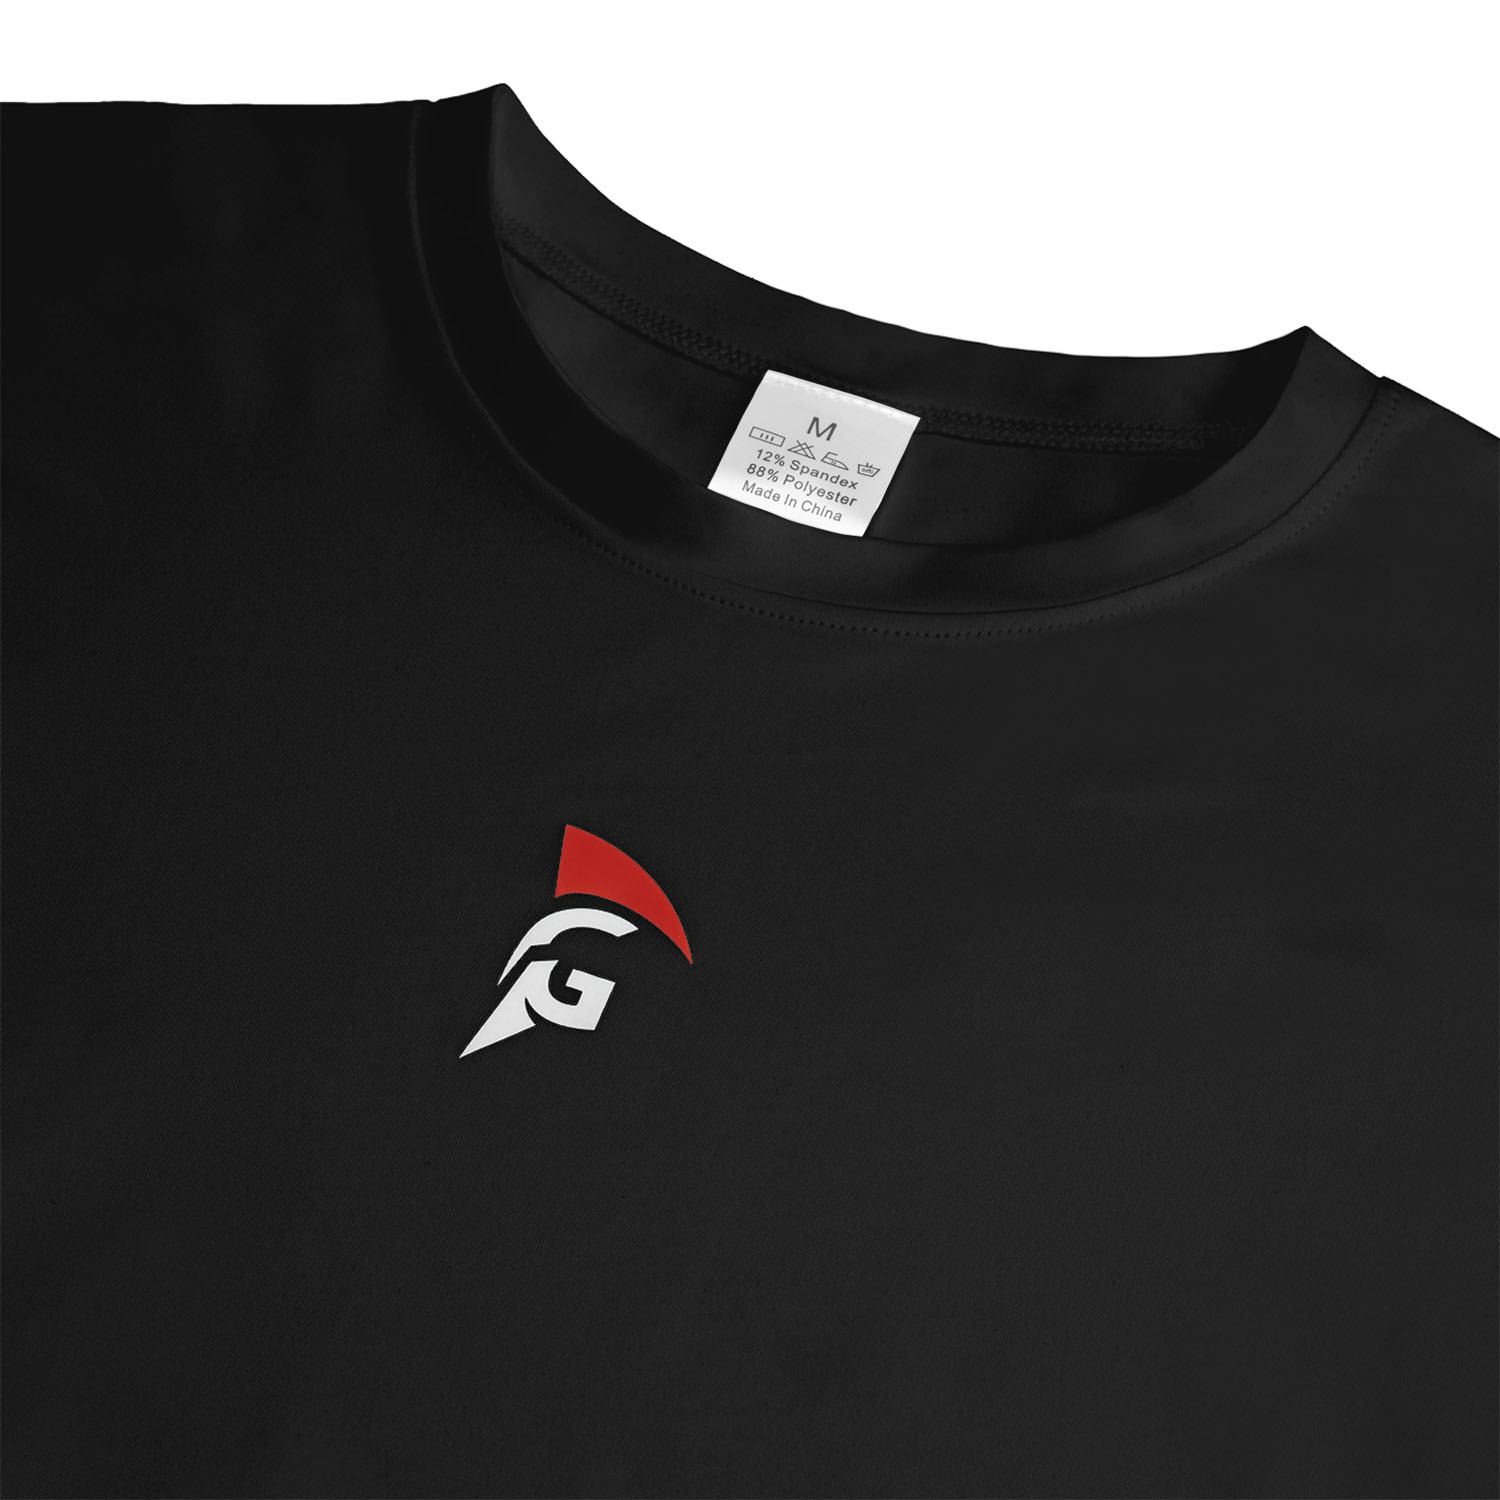 Gladiator Sports Compression Shirt - Men